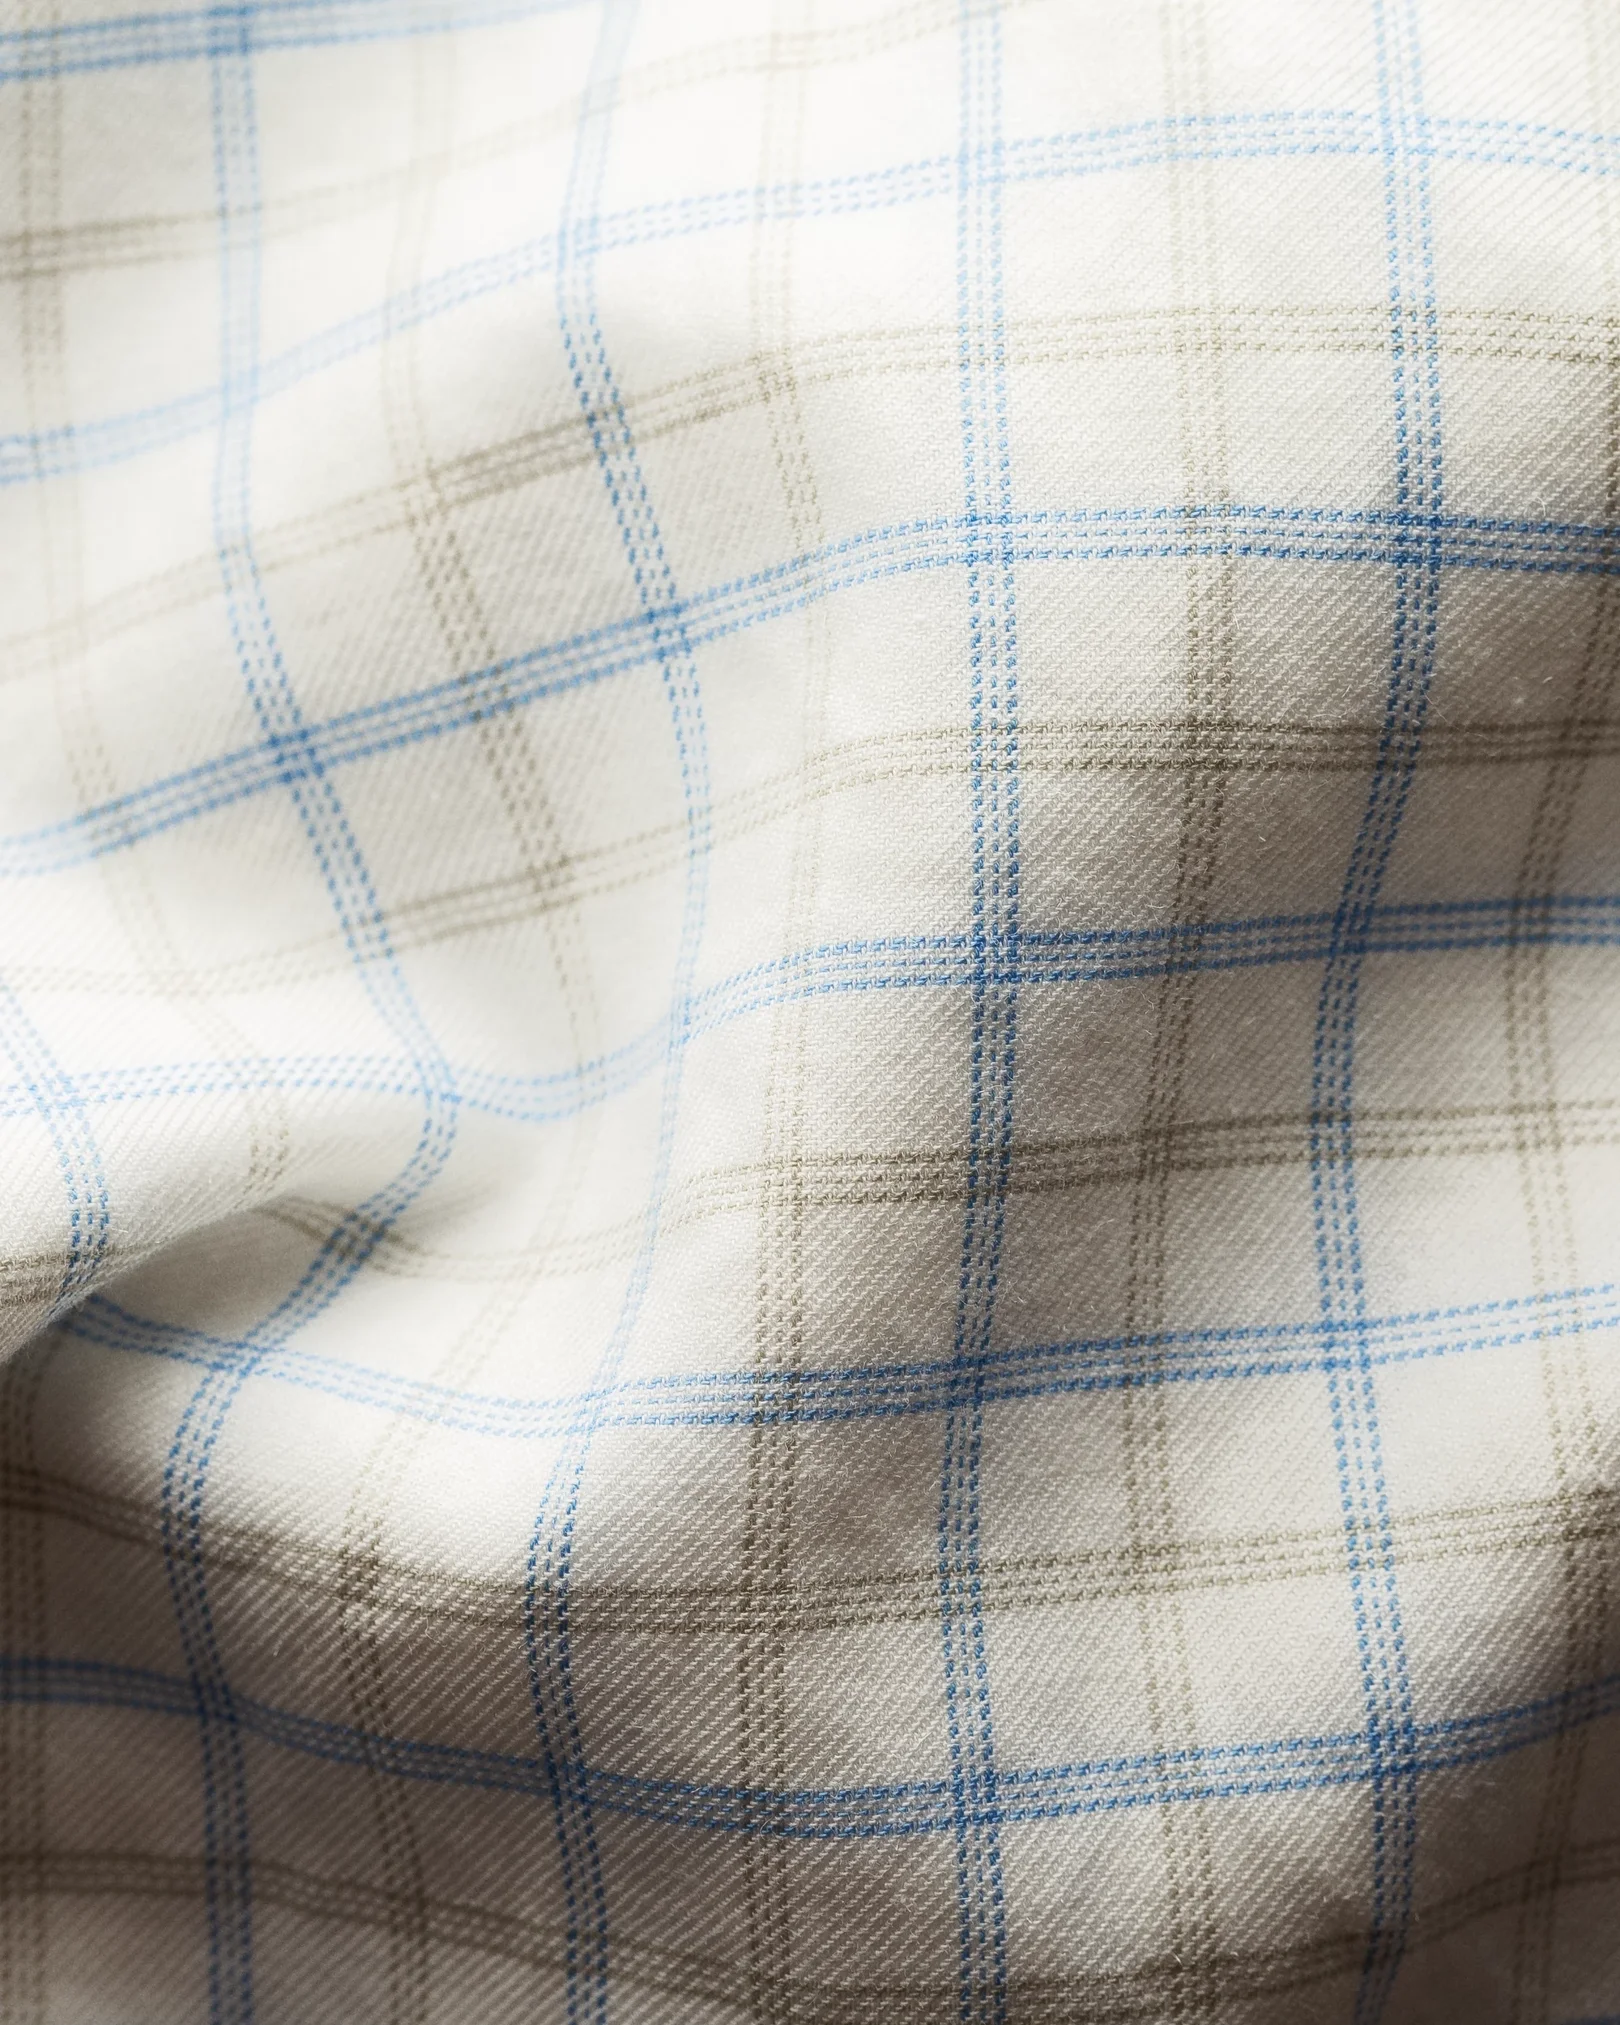 Eton - light blue checks cotton and silk shirt